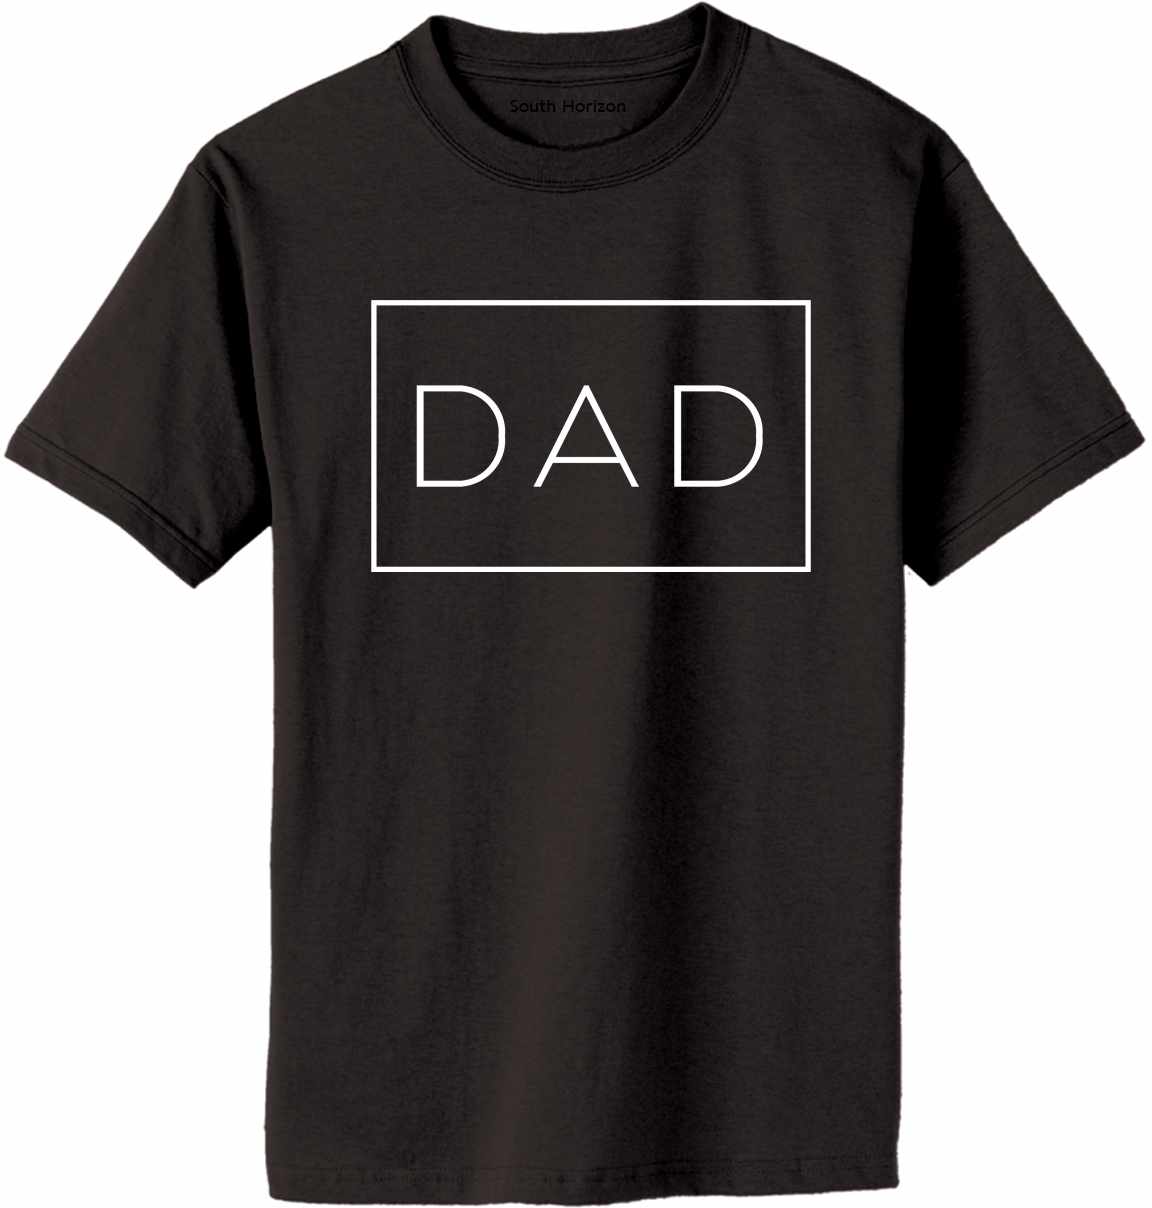 DAD - Daddy - Box on Adult T-Shirt